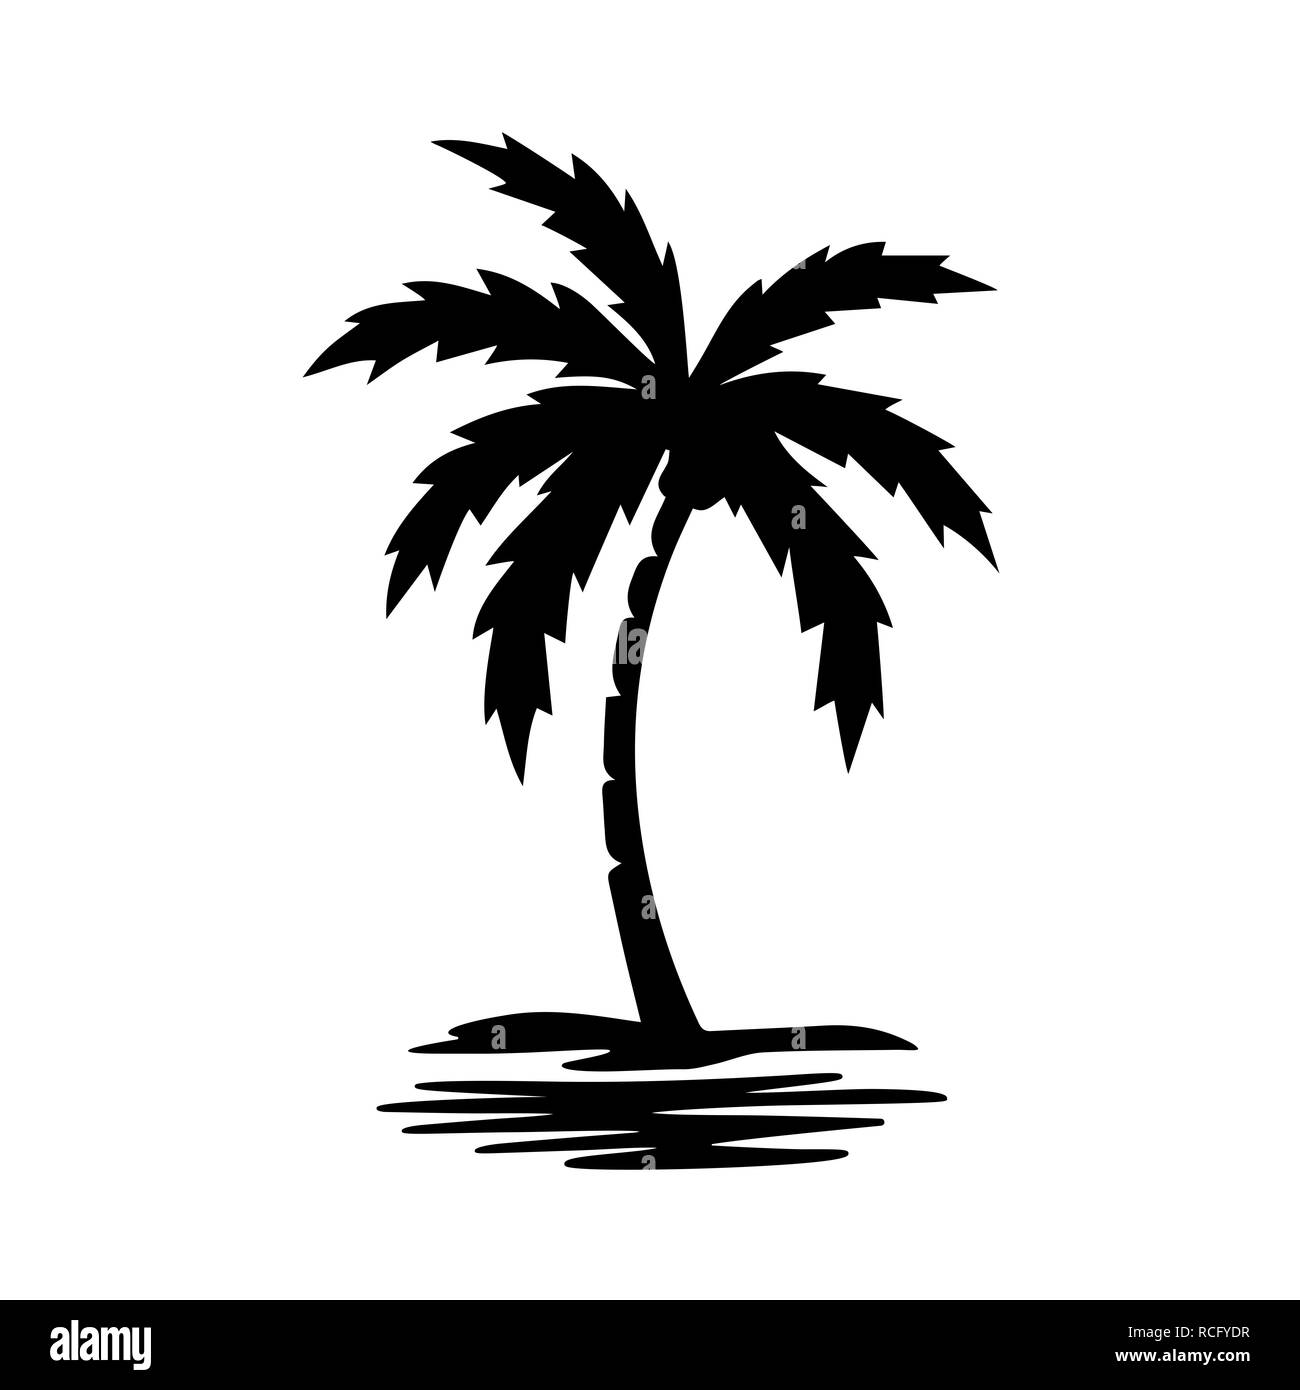 Palm tree silhouette vector image. Stock Photo